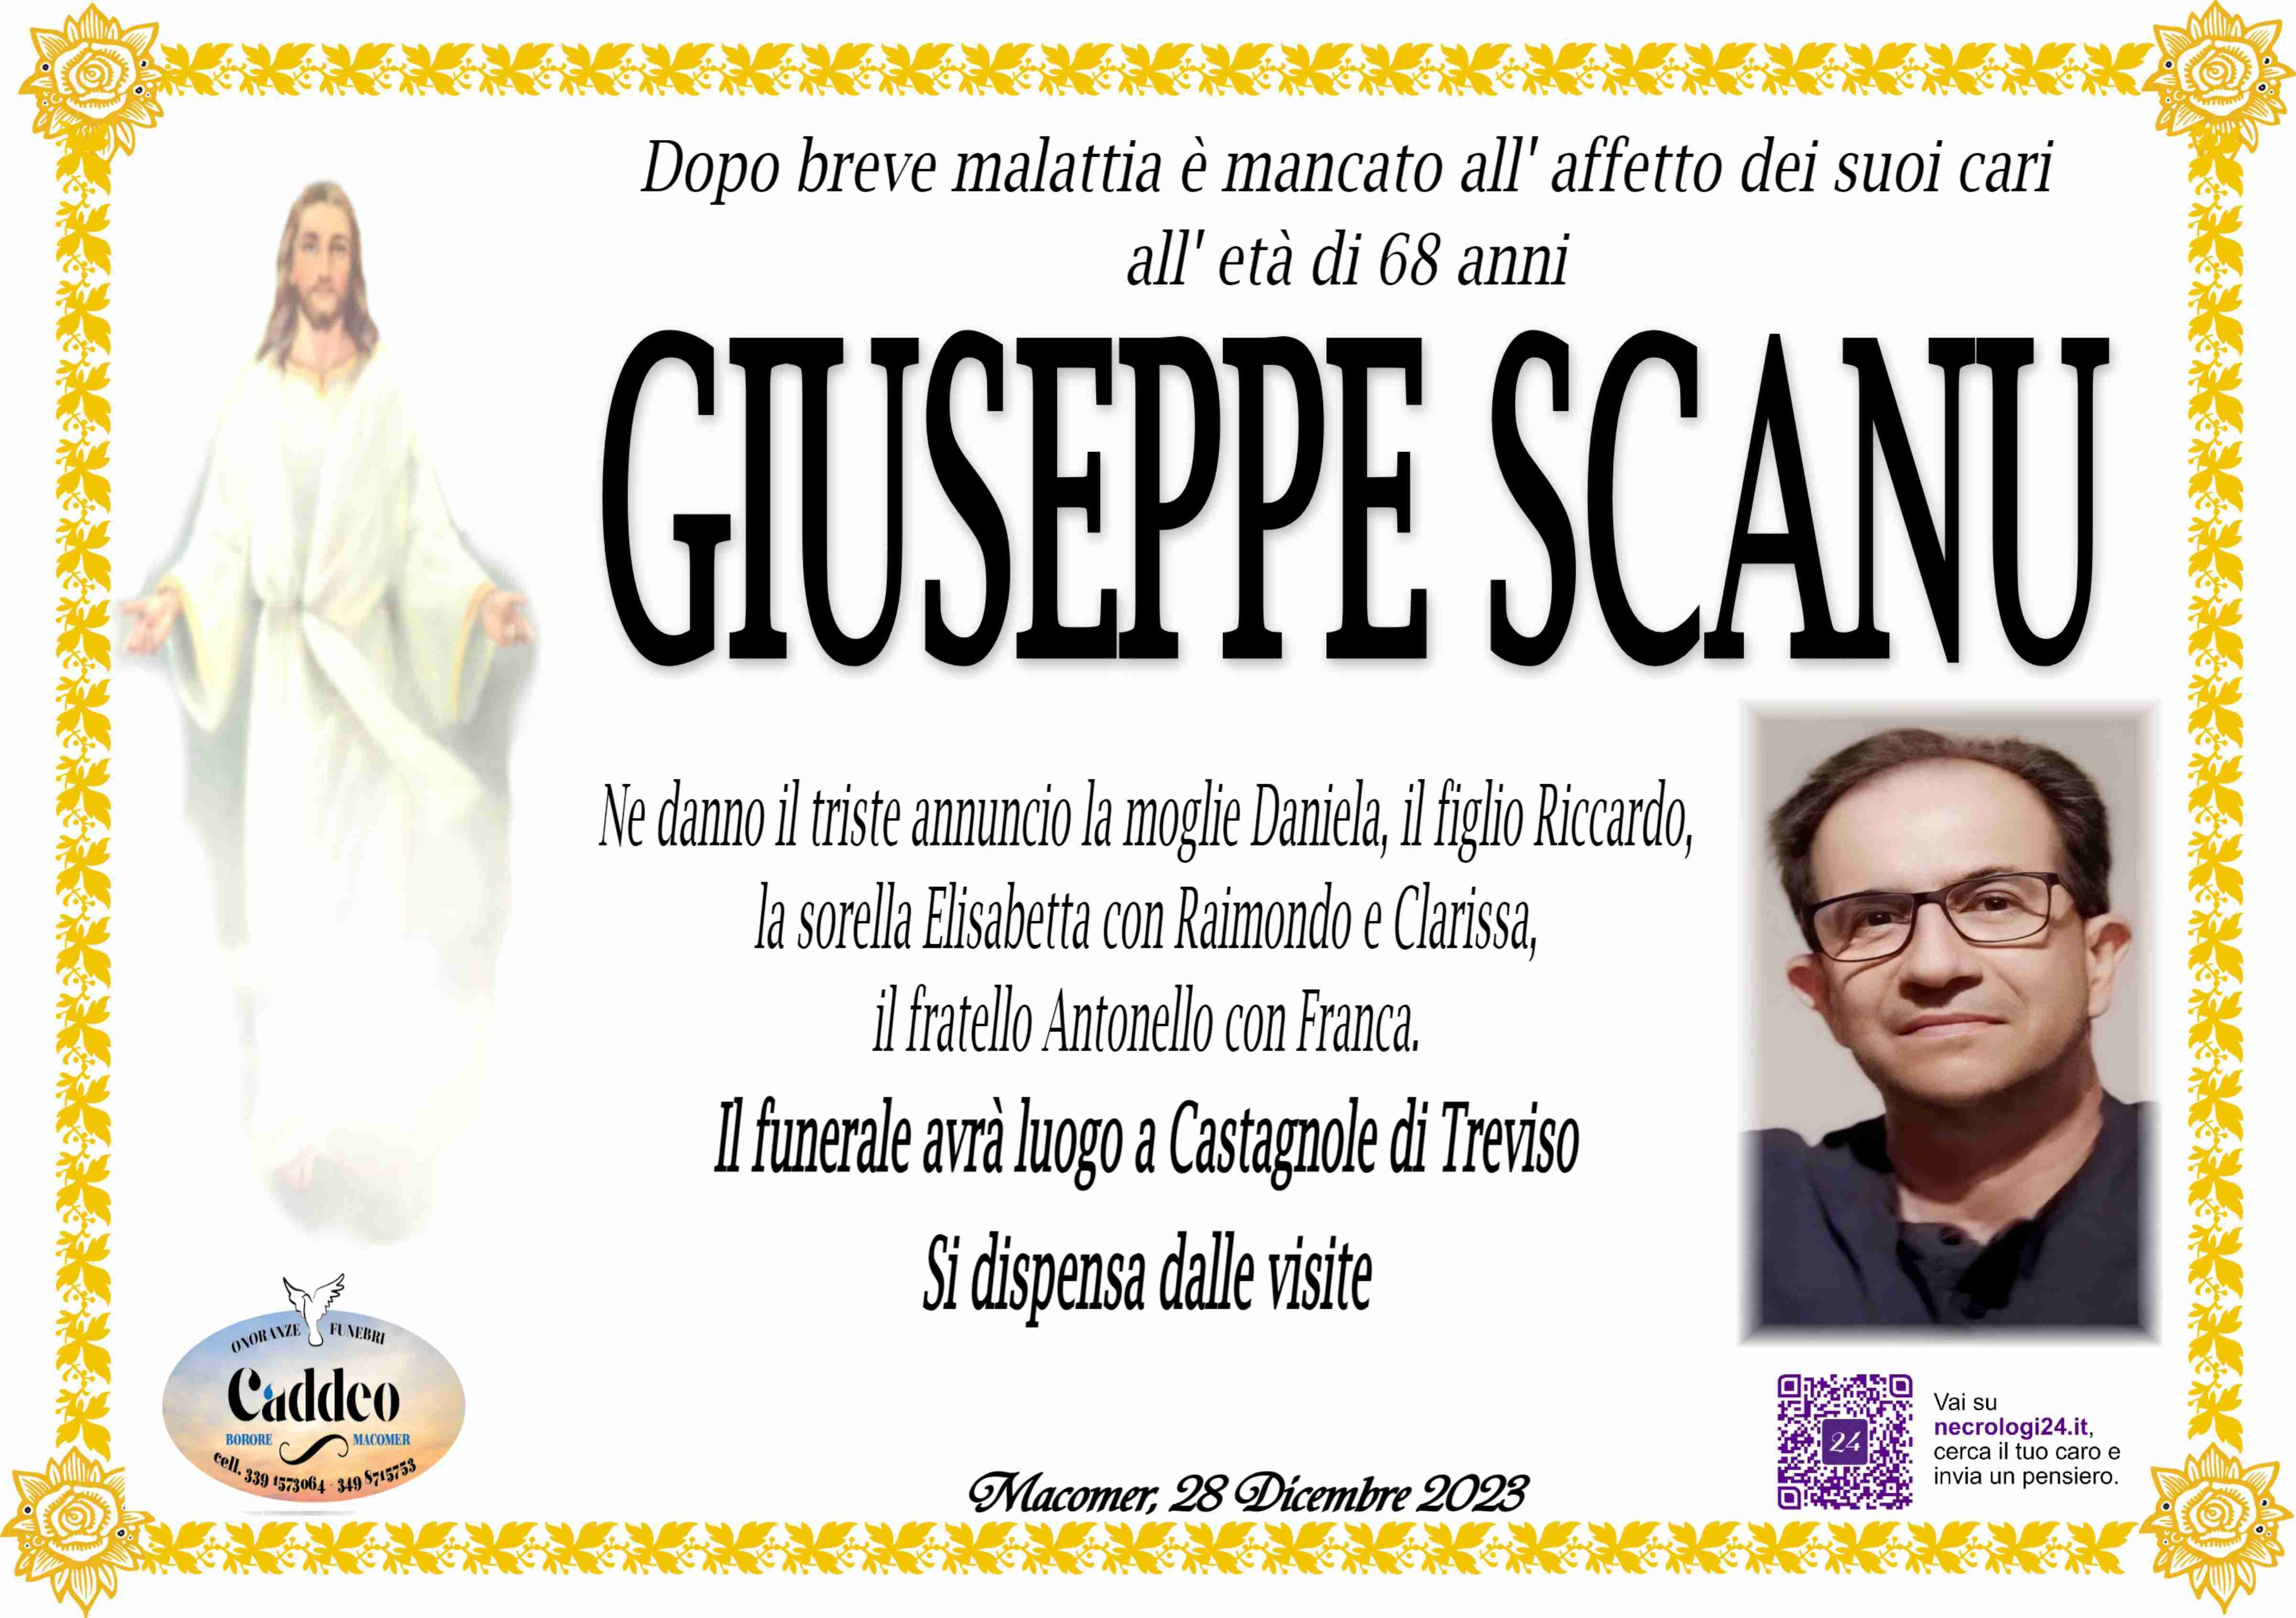 Giuseppe Scanu